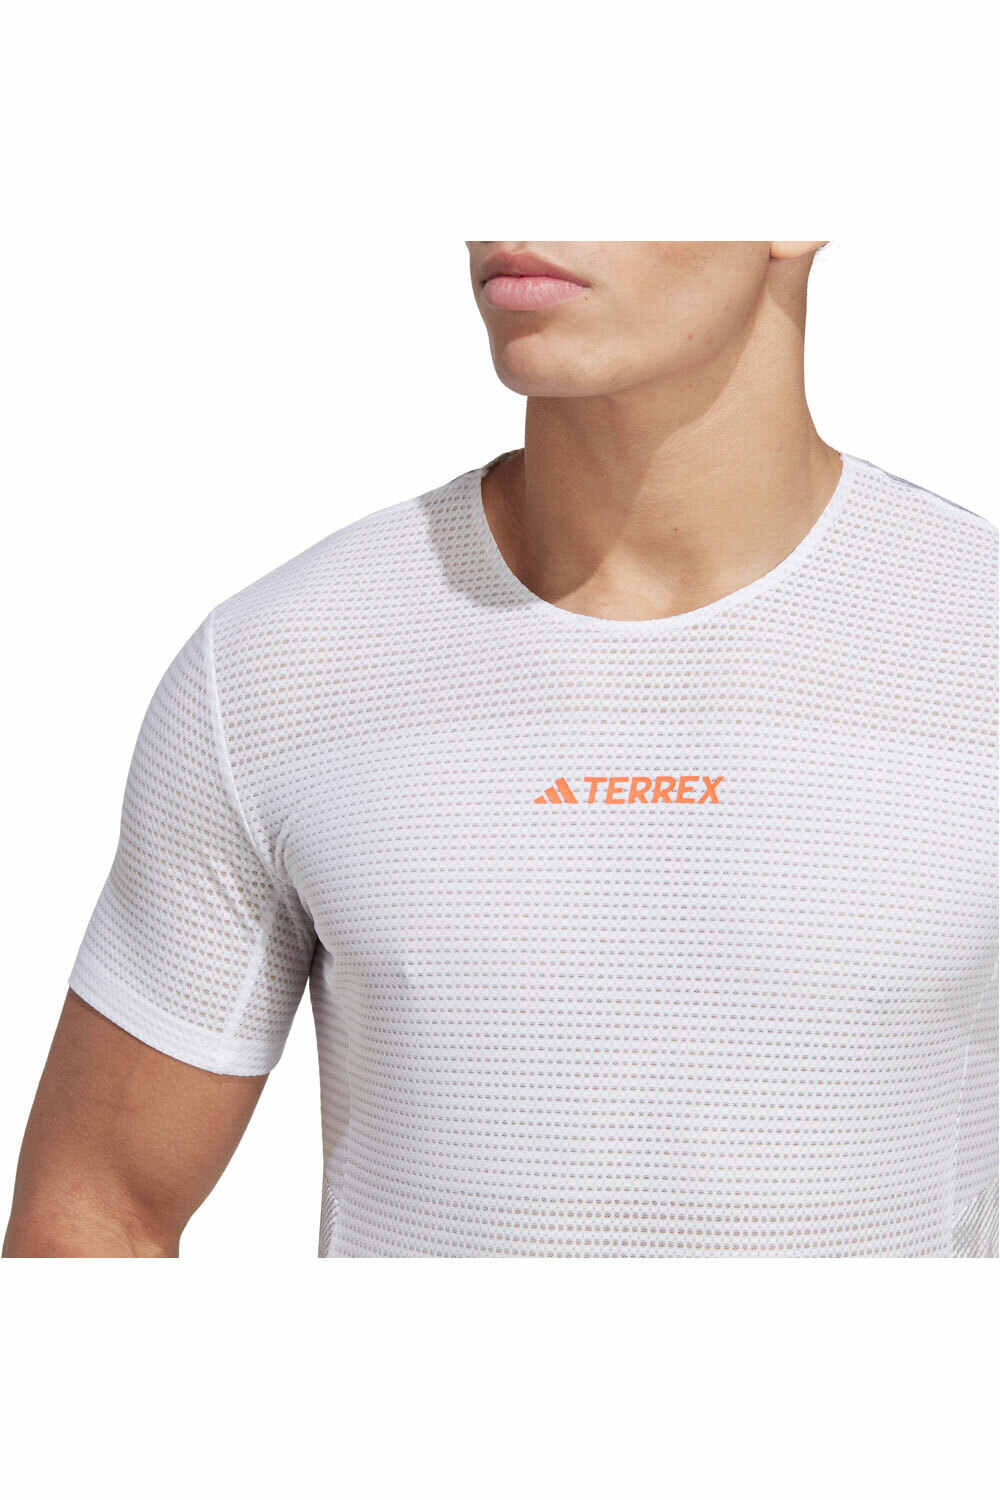 adidas camisetas trail running manga corta hombre Terrex Agravic Pro Trail Running vista detalle